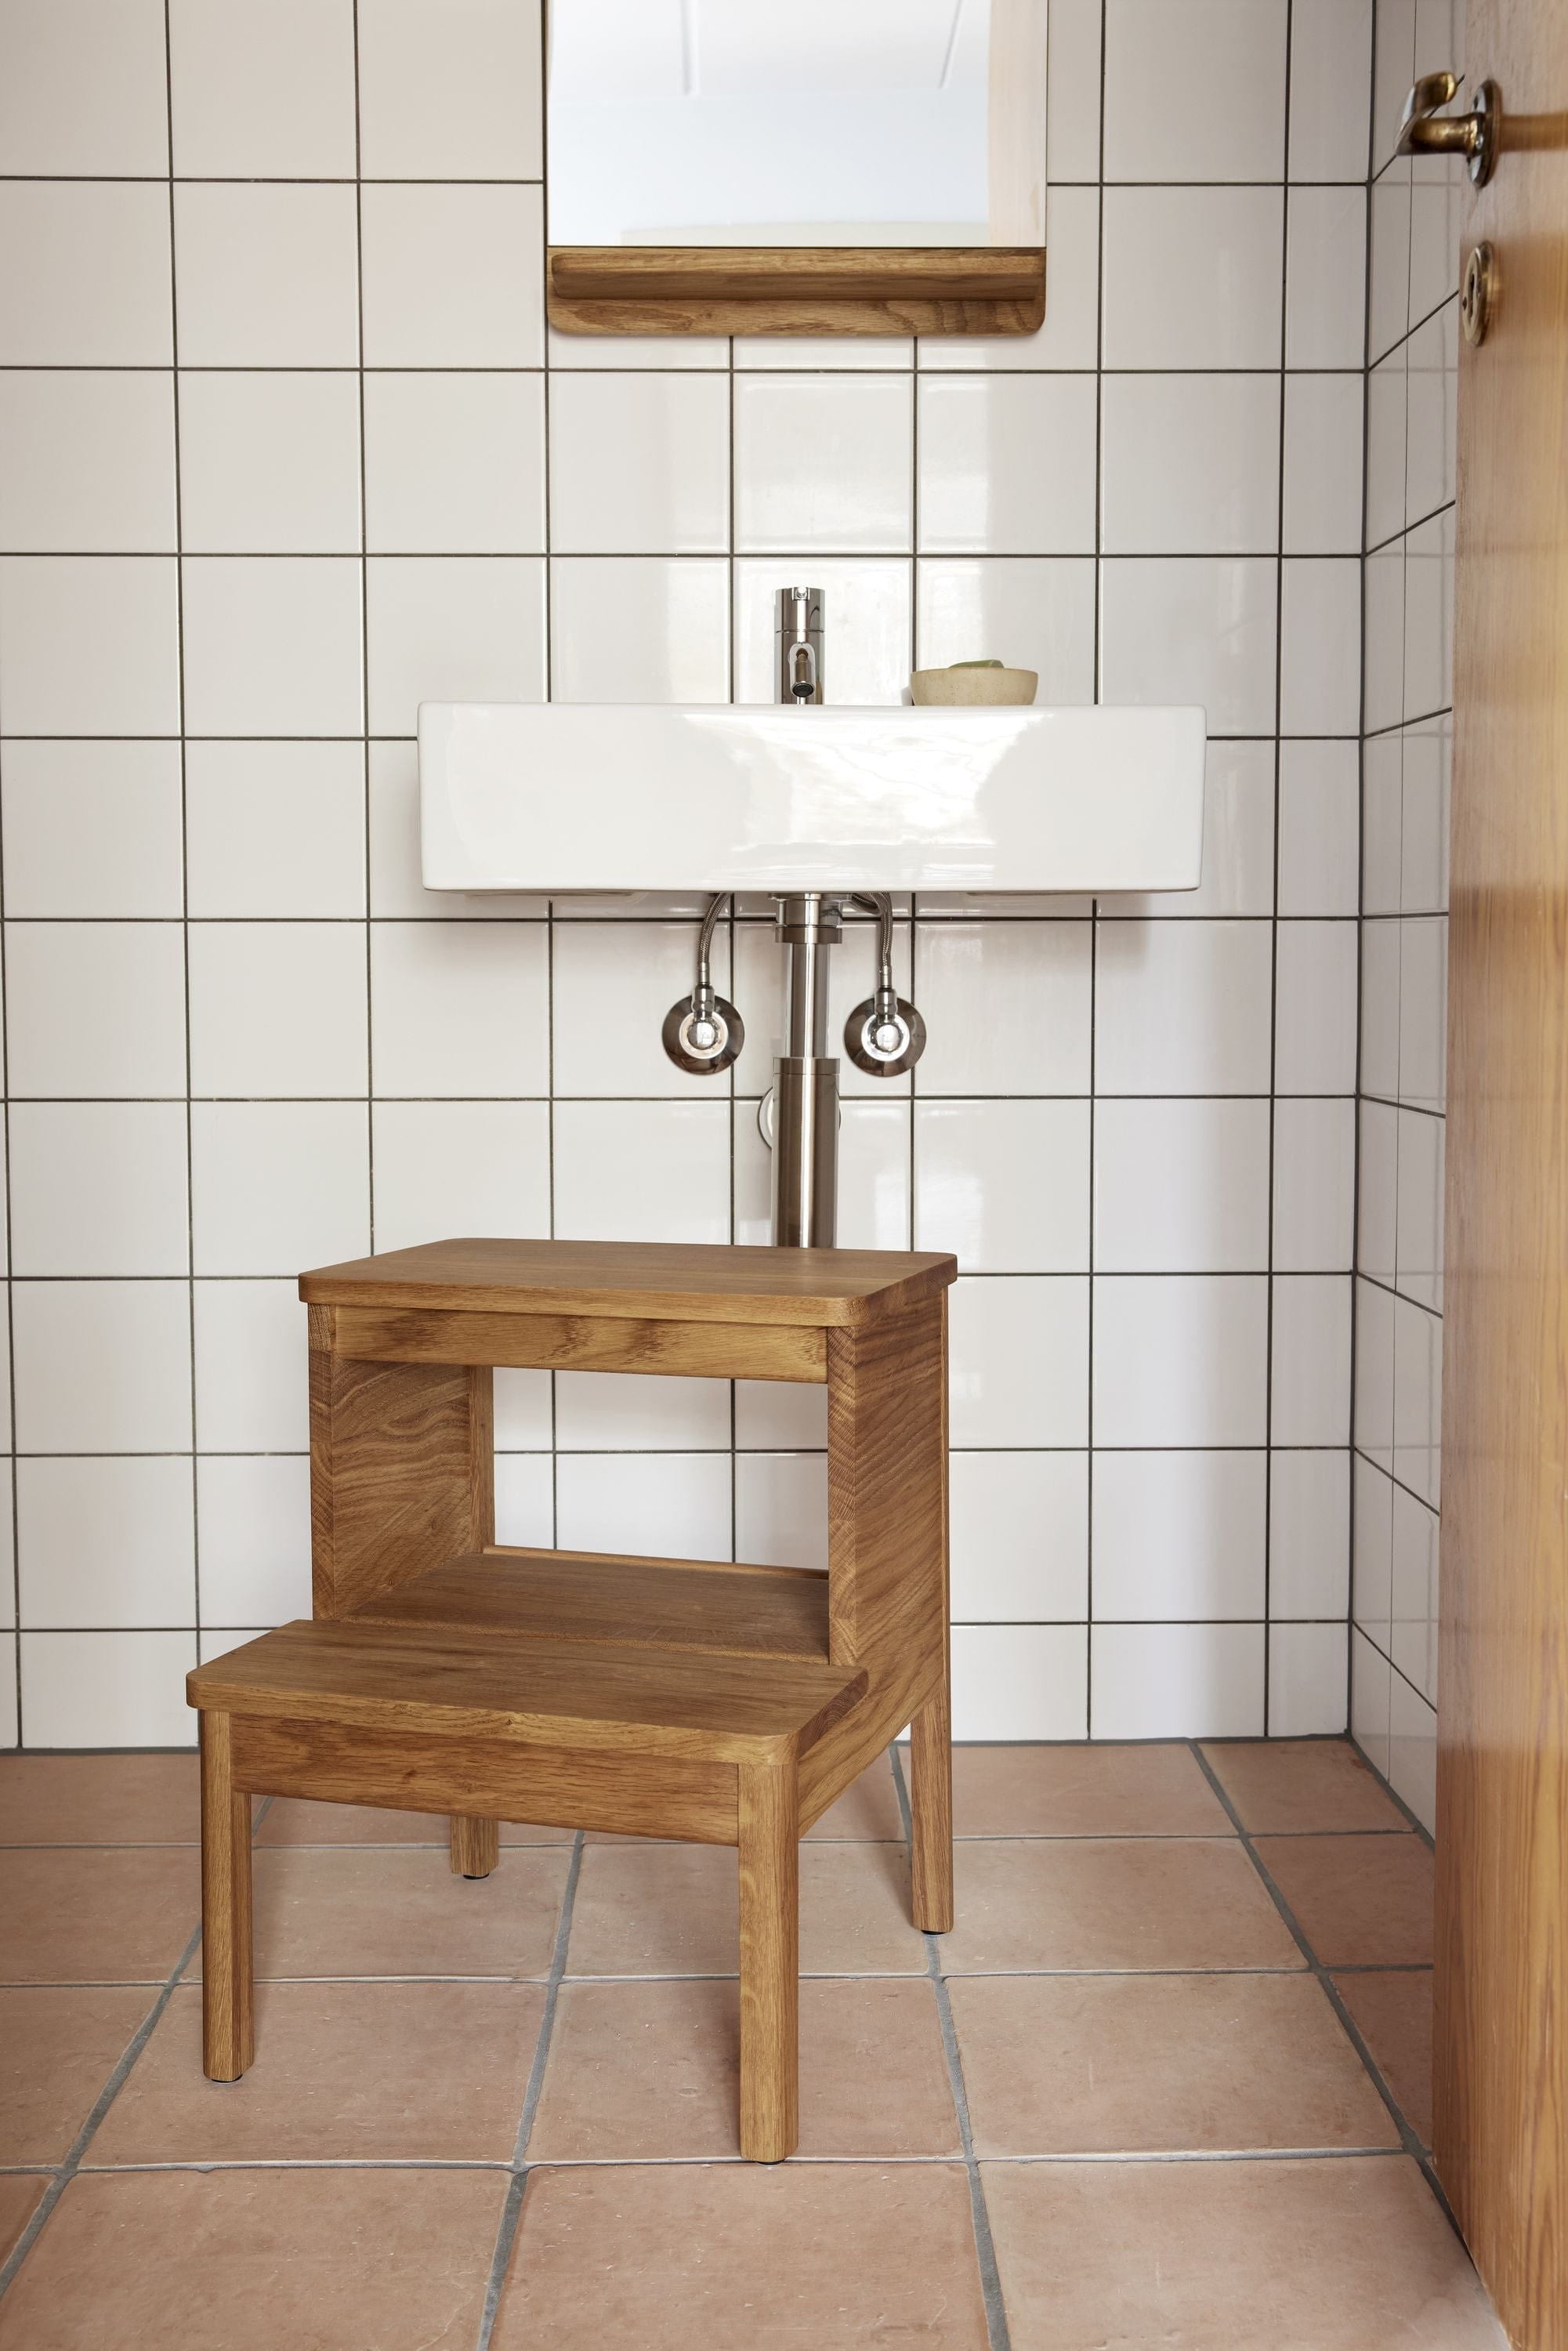 Form & Refine A Line Stepstool. White Oak